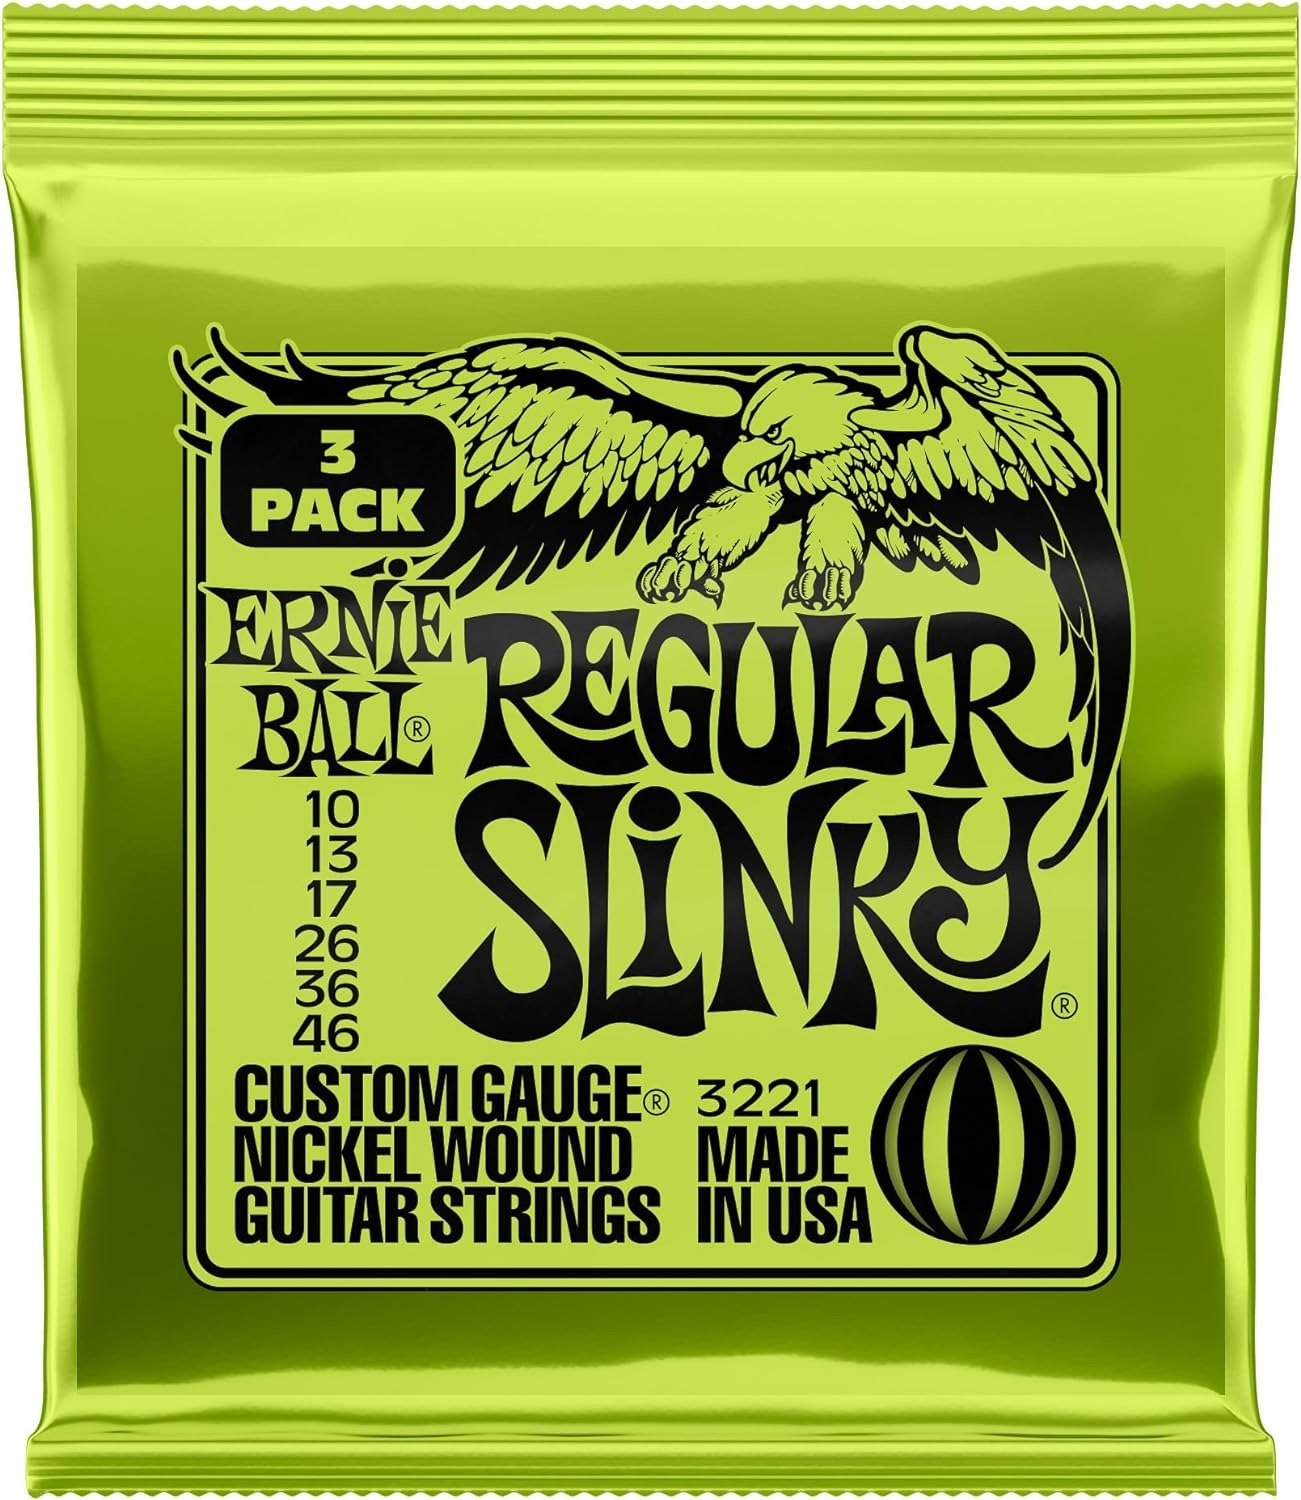 3-pack Ernie Ball Slinky guitar strings - all gauges - $13.99